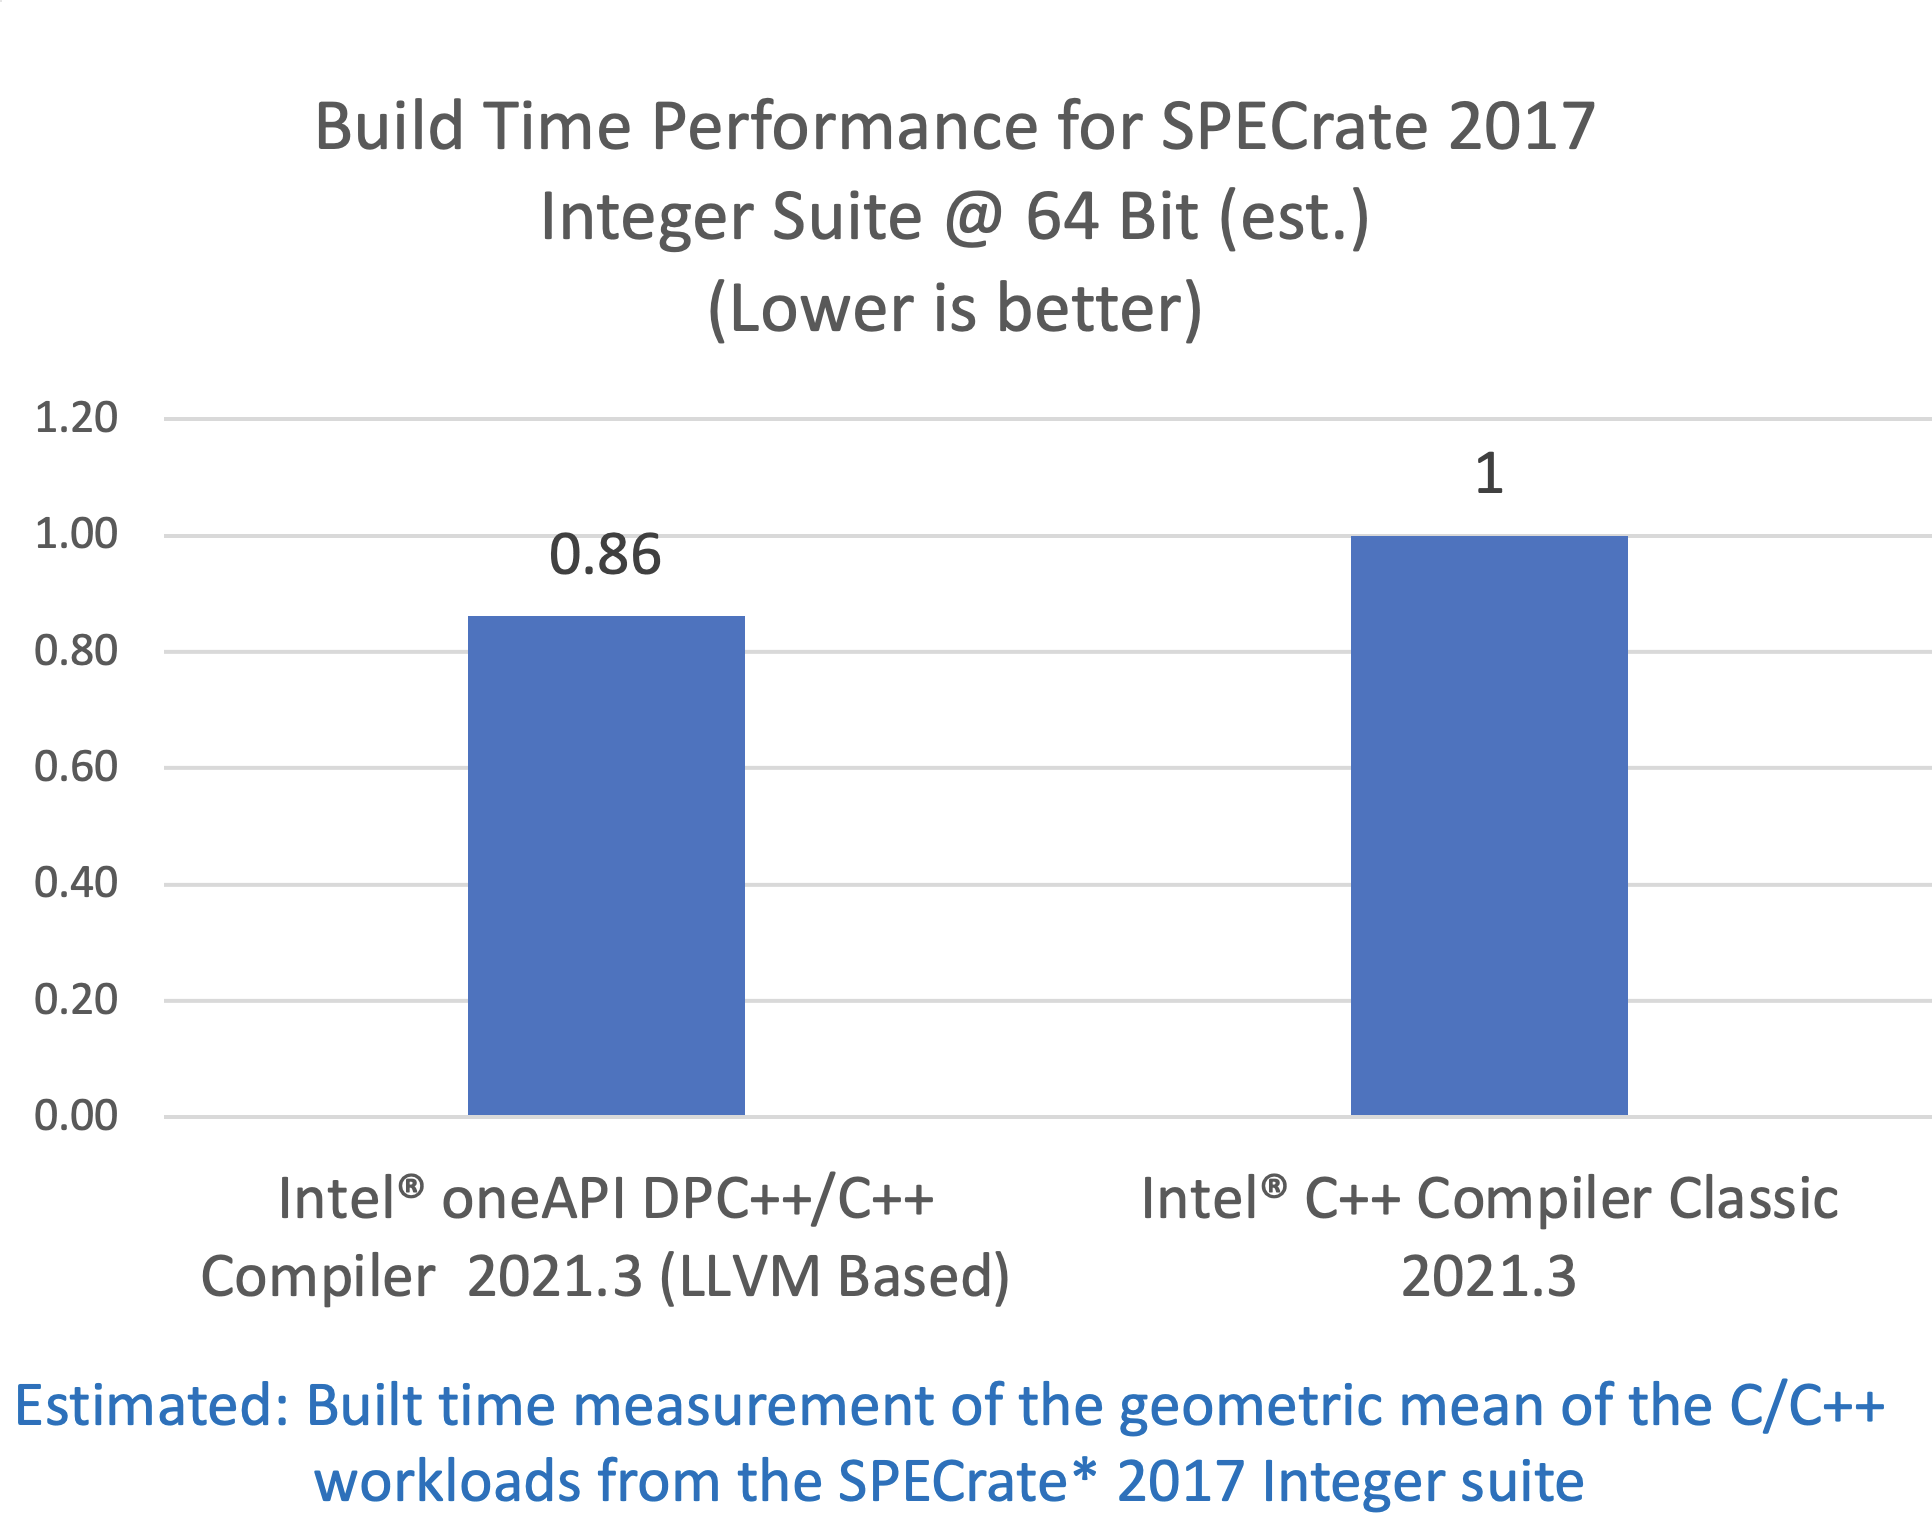 Build Time Performance on Linux SPECrate 2017 Integer Suite 64 Bit (Estimated)